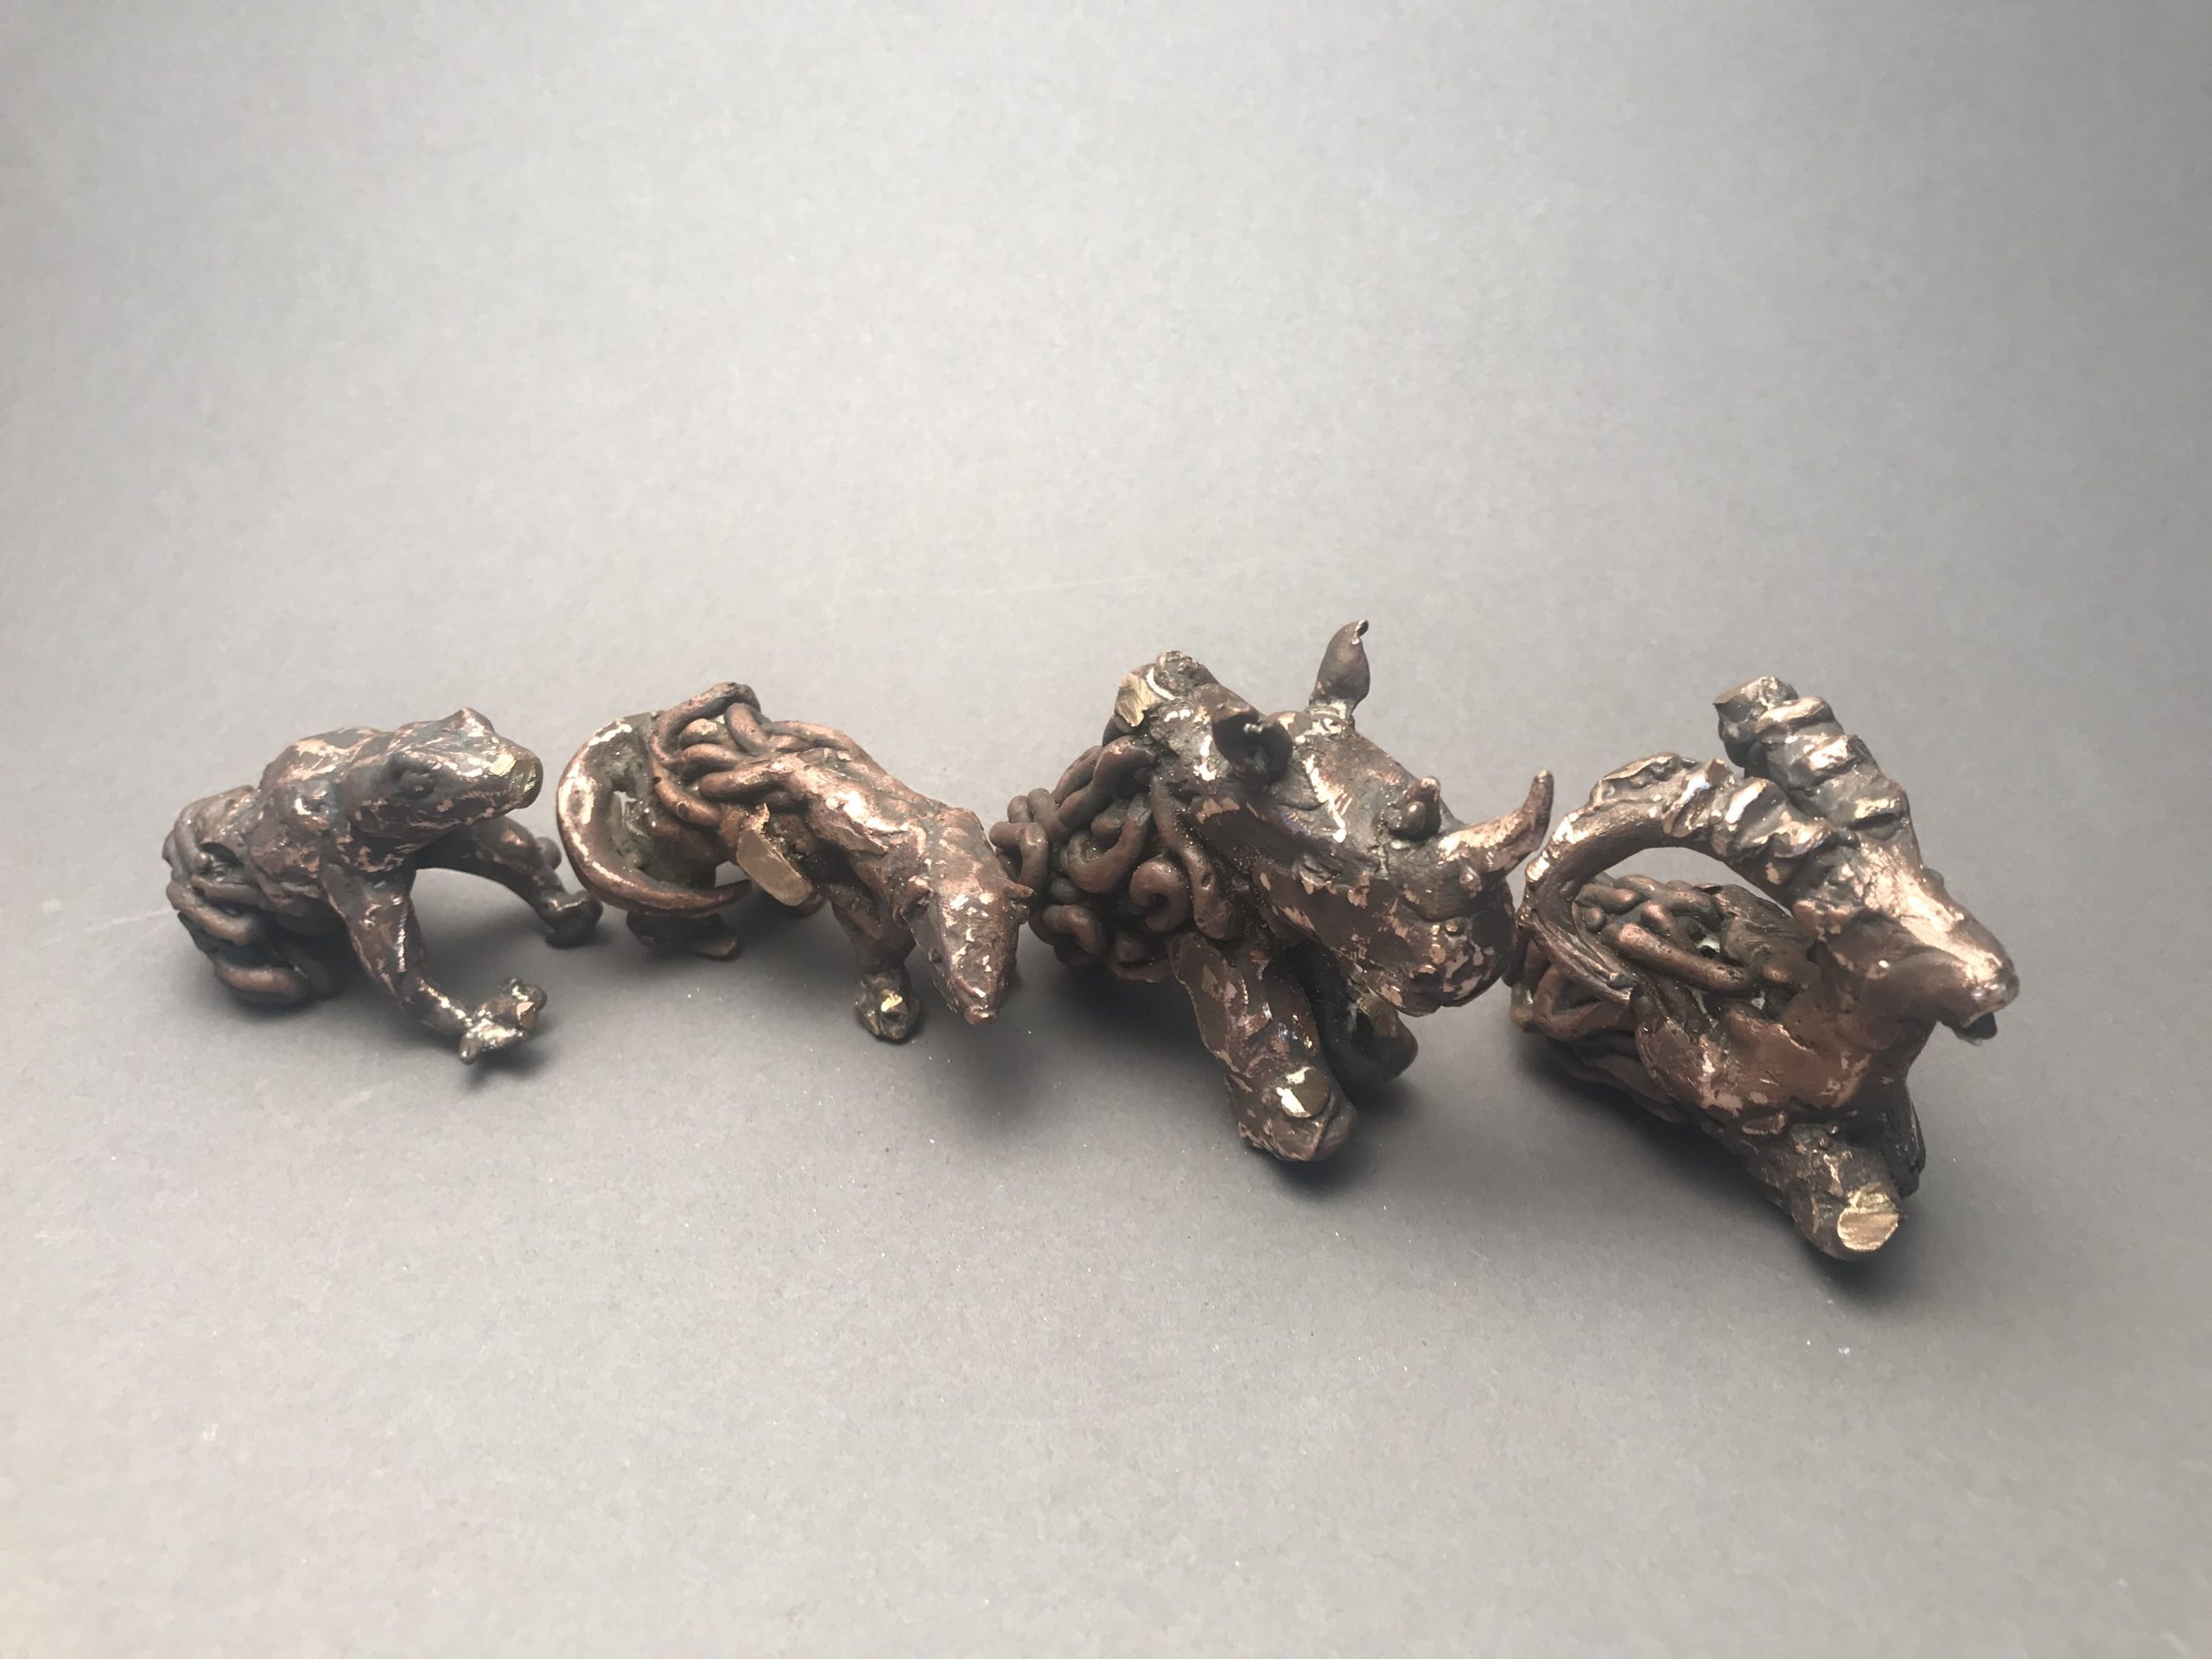 Four metal sculptures of extinct animals